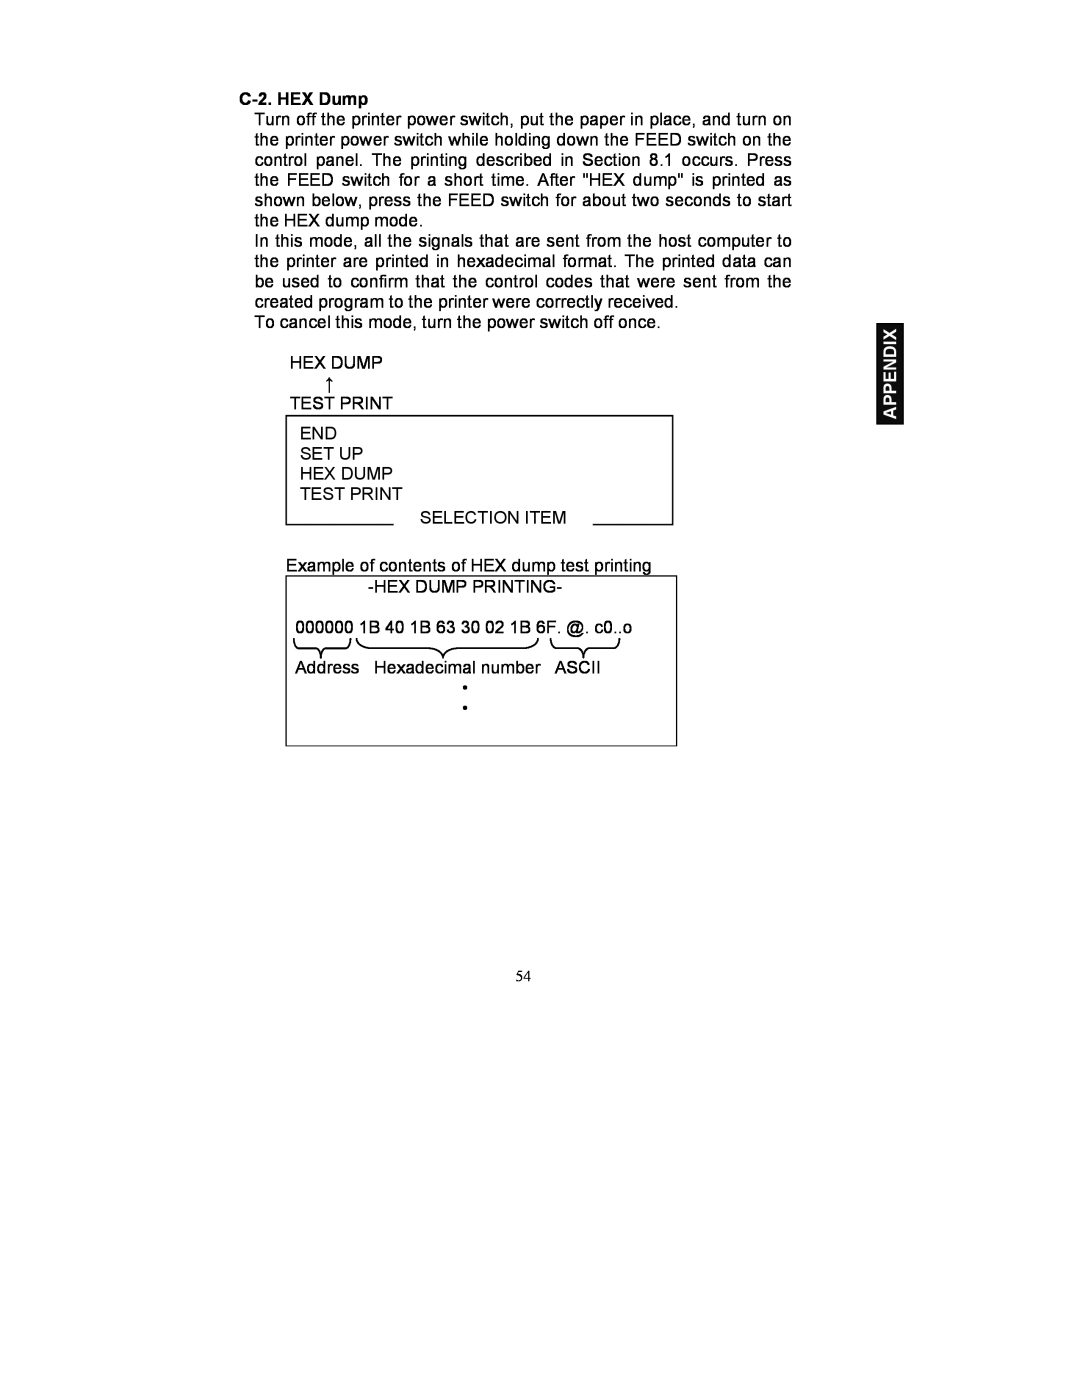 Fujitsu FP-410 user manual C-2. HEX Dump, Appendix 